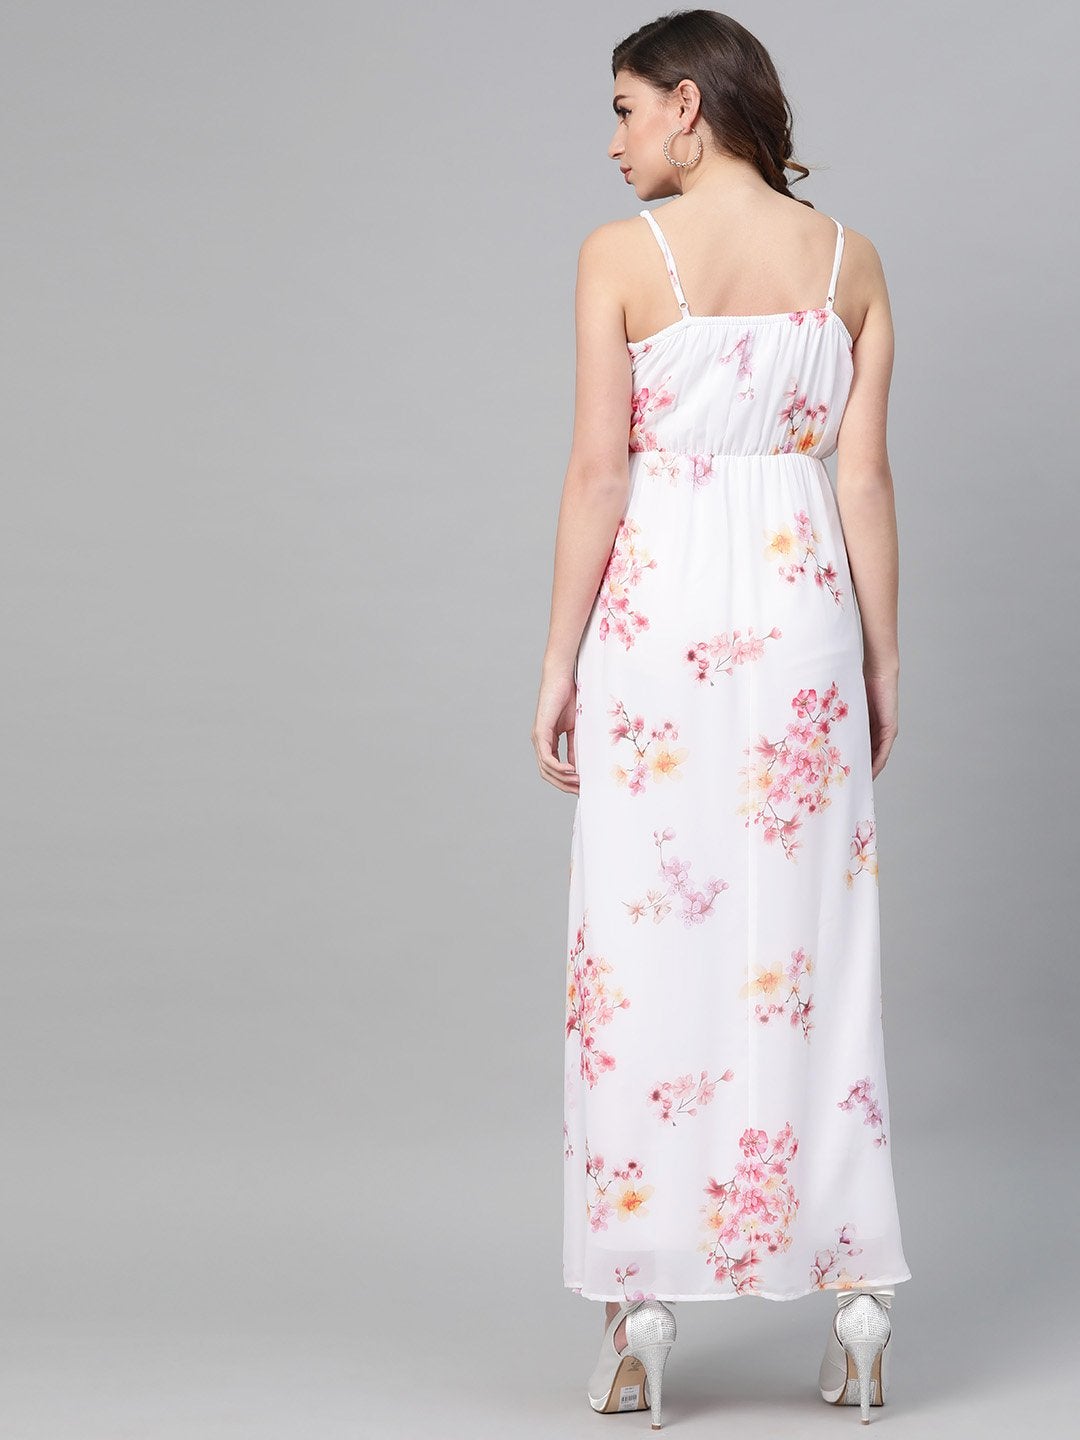 Women's Off-White Floral Strappy Maxi Dress - SASSAFRAS